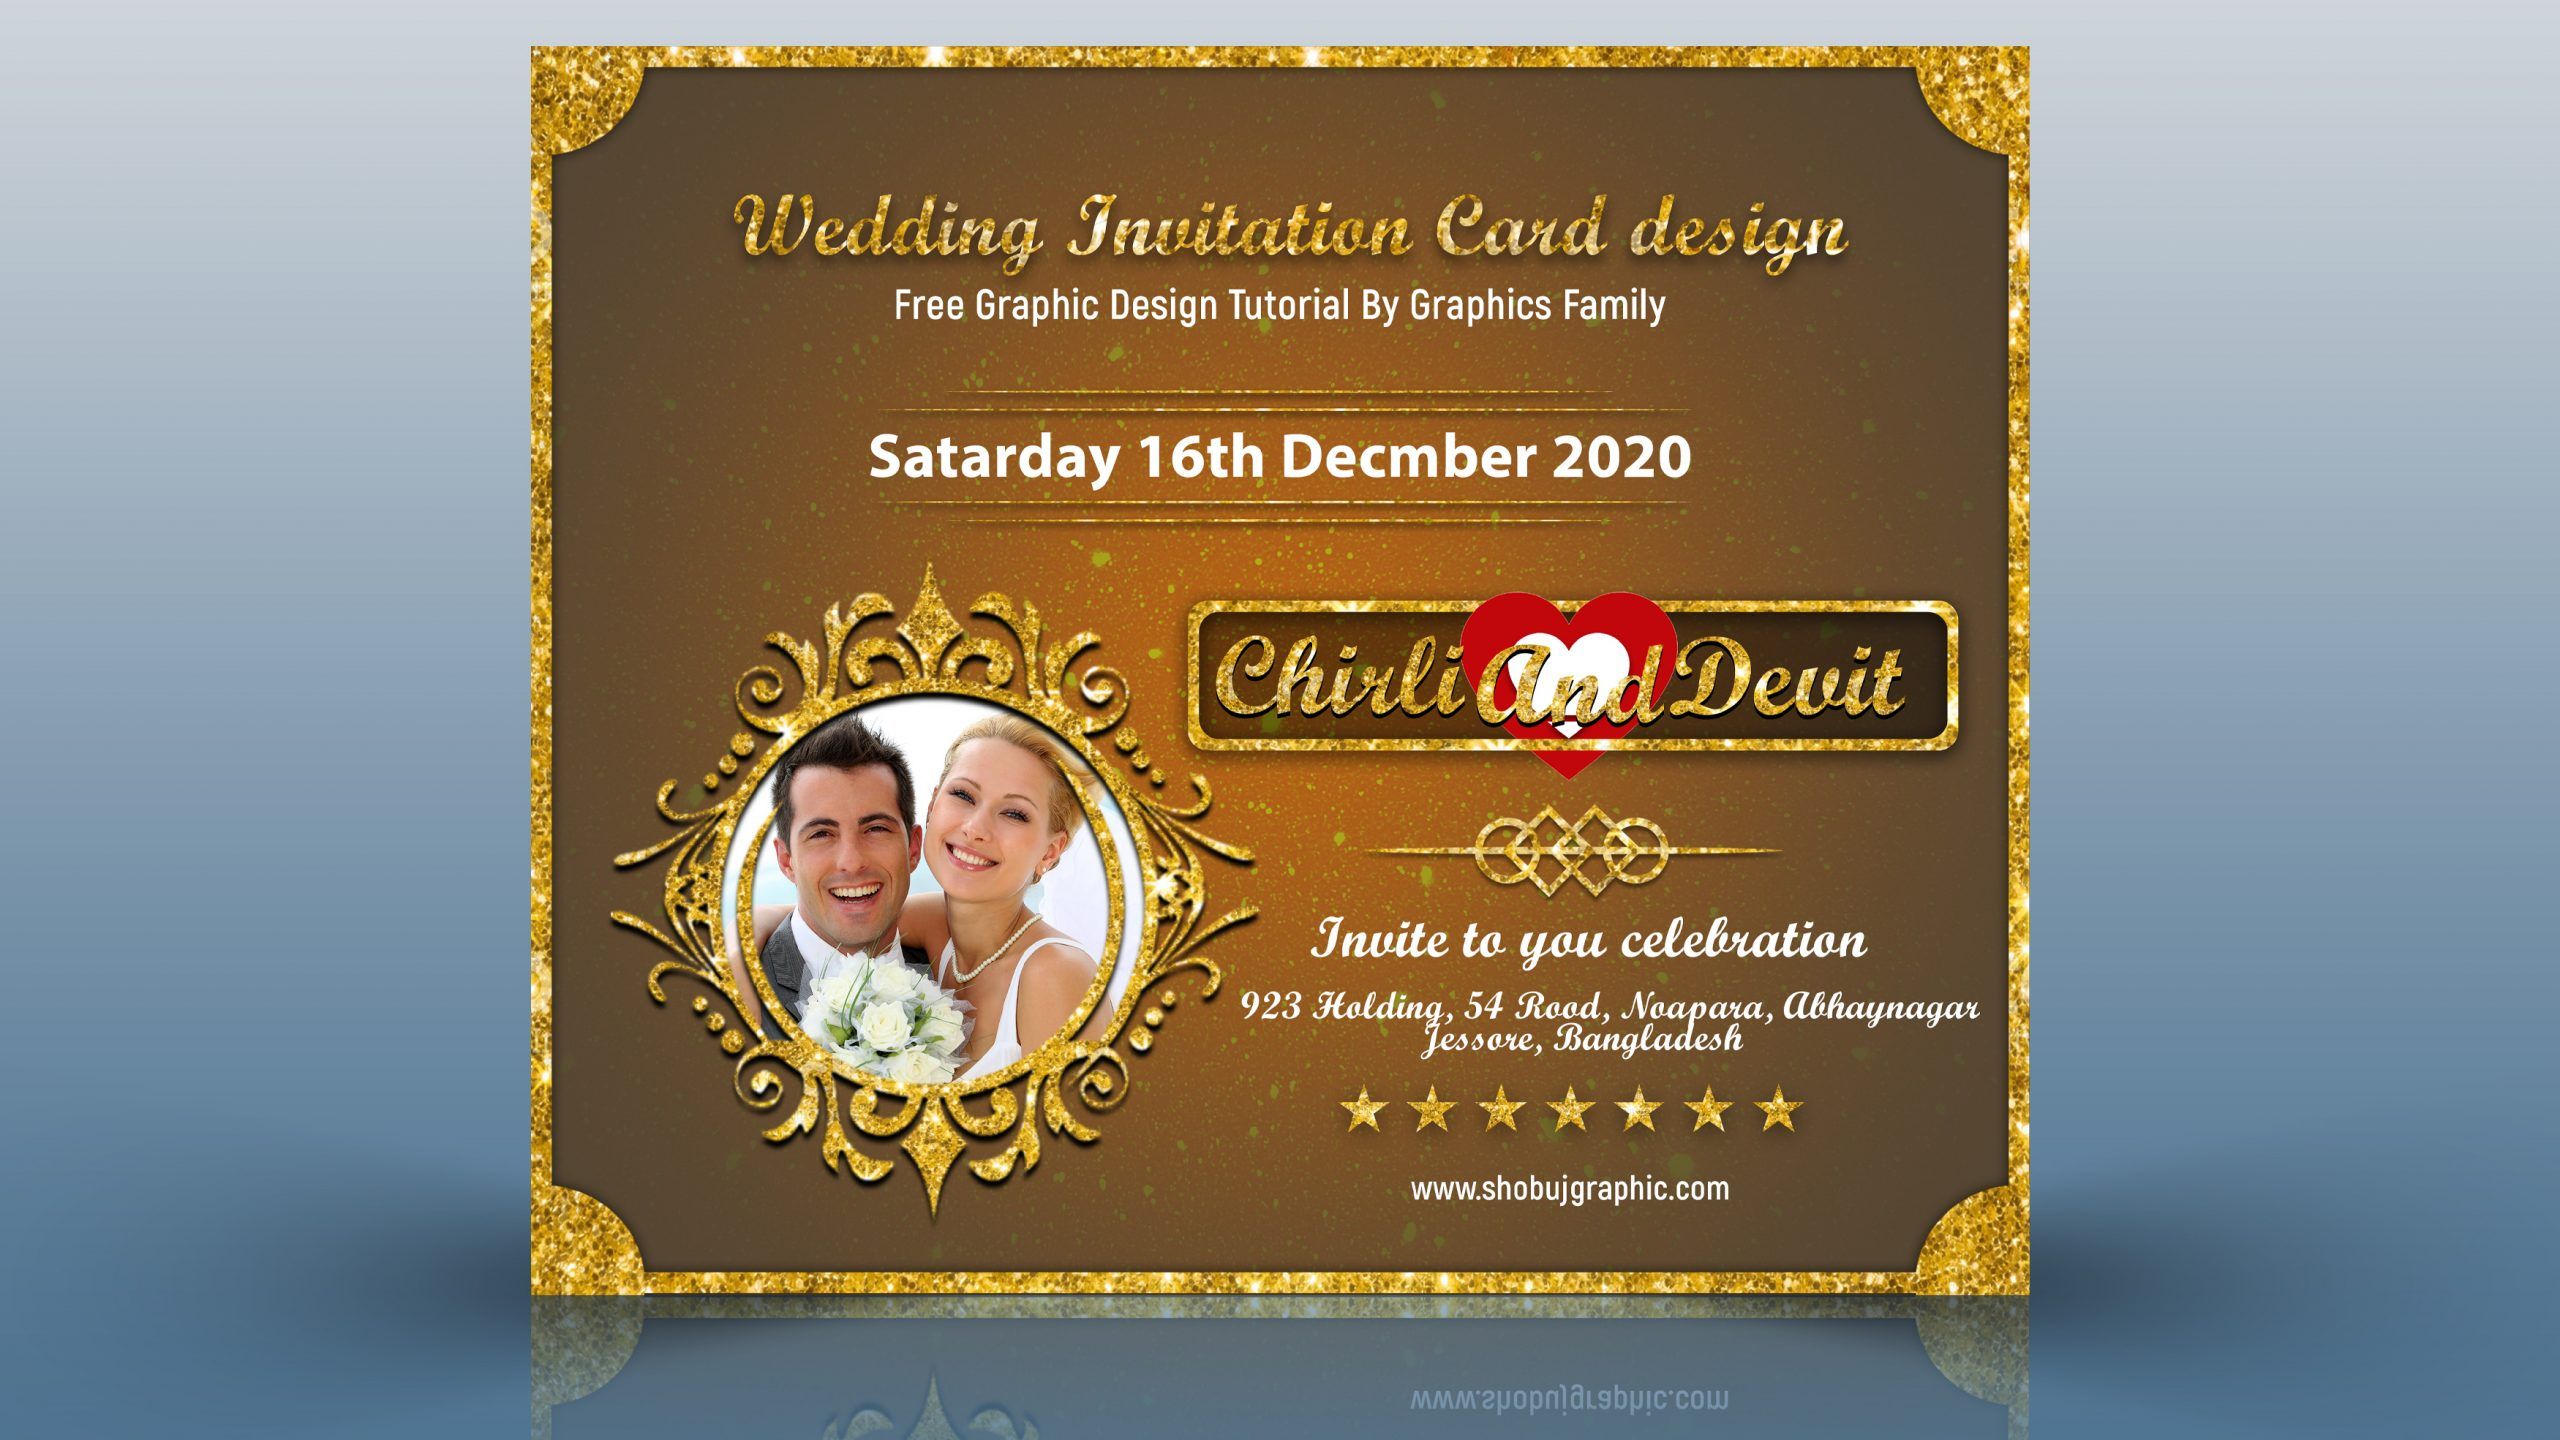 Customized Wedding Invitation Cards